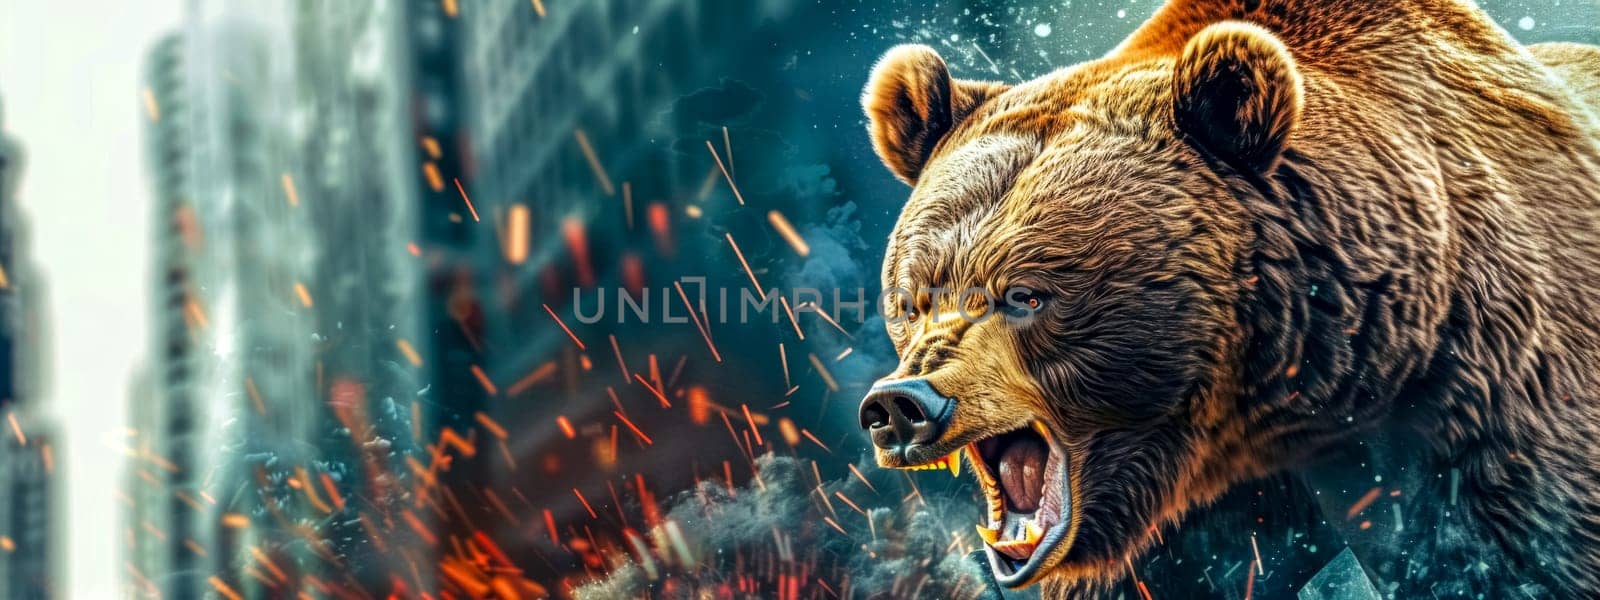 Ferocious bear roaring amidst blazing sparks by Edophoto